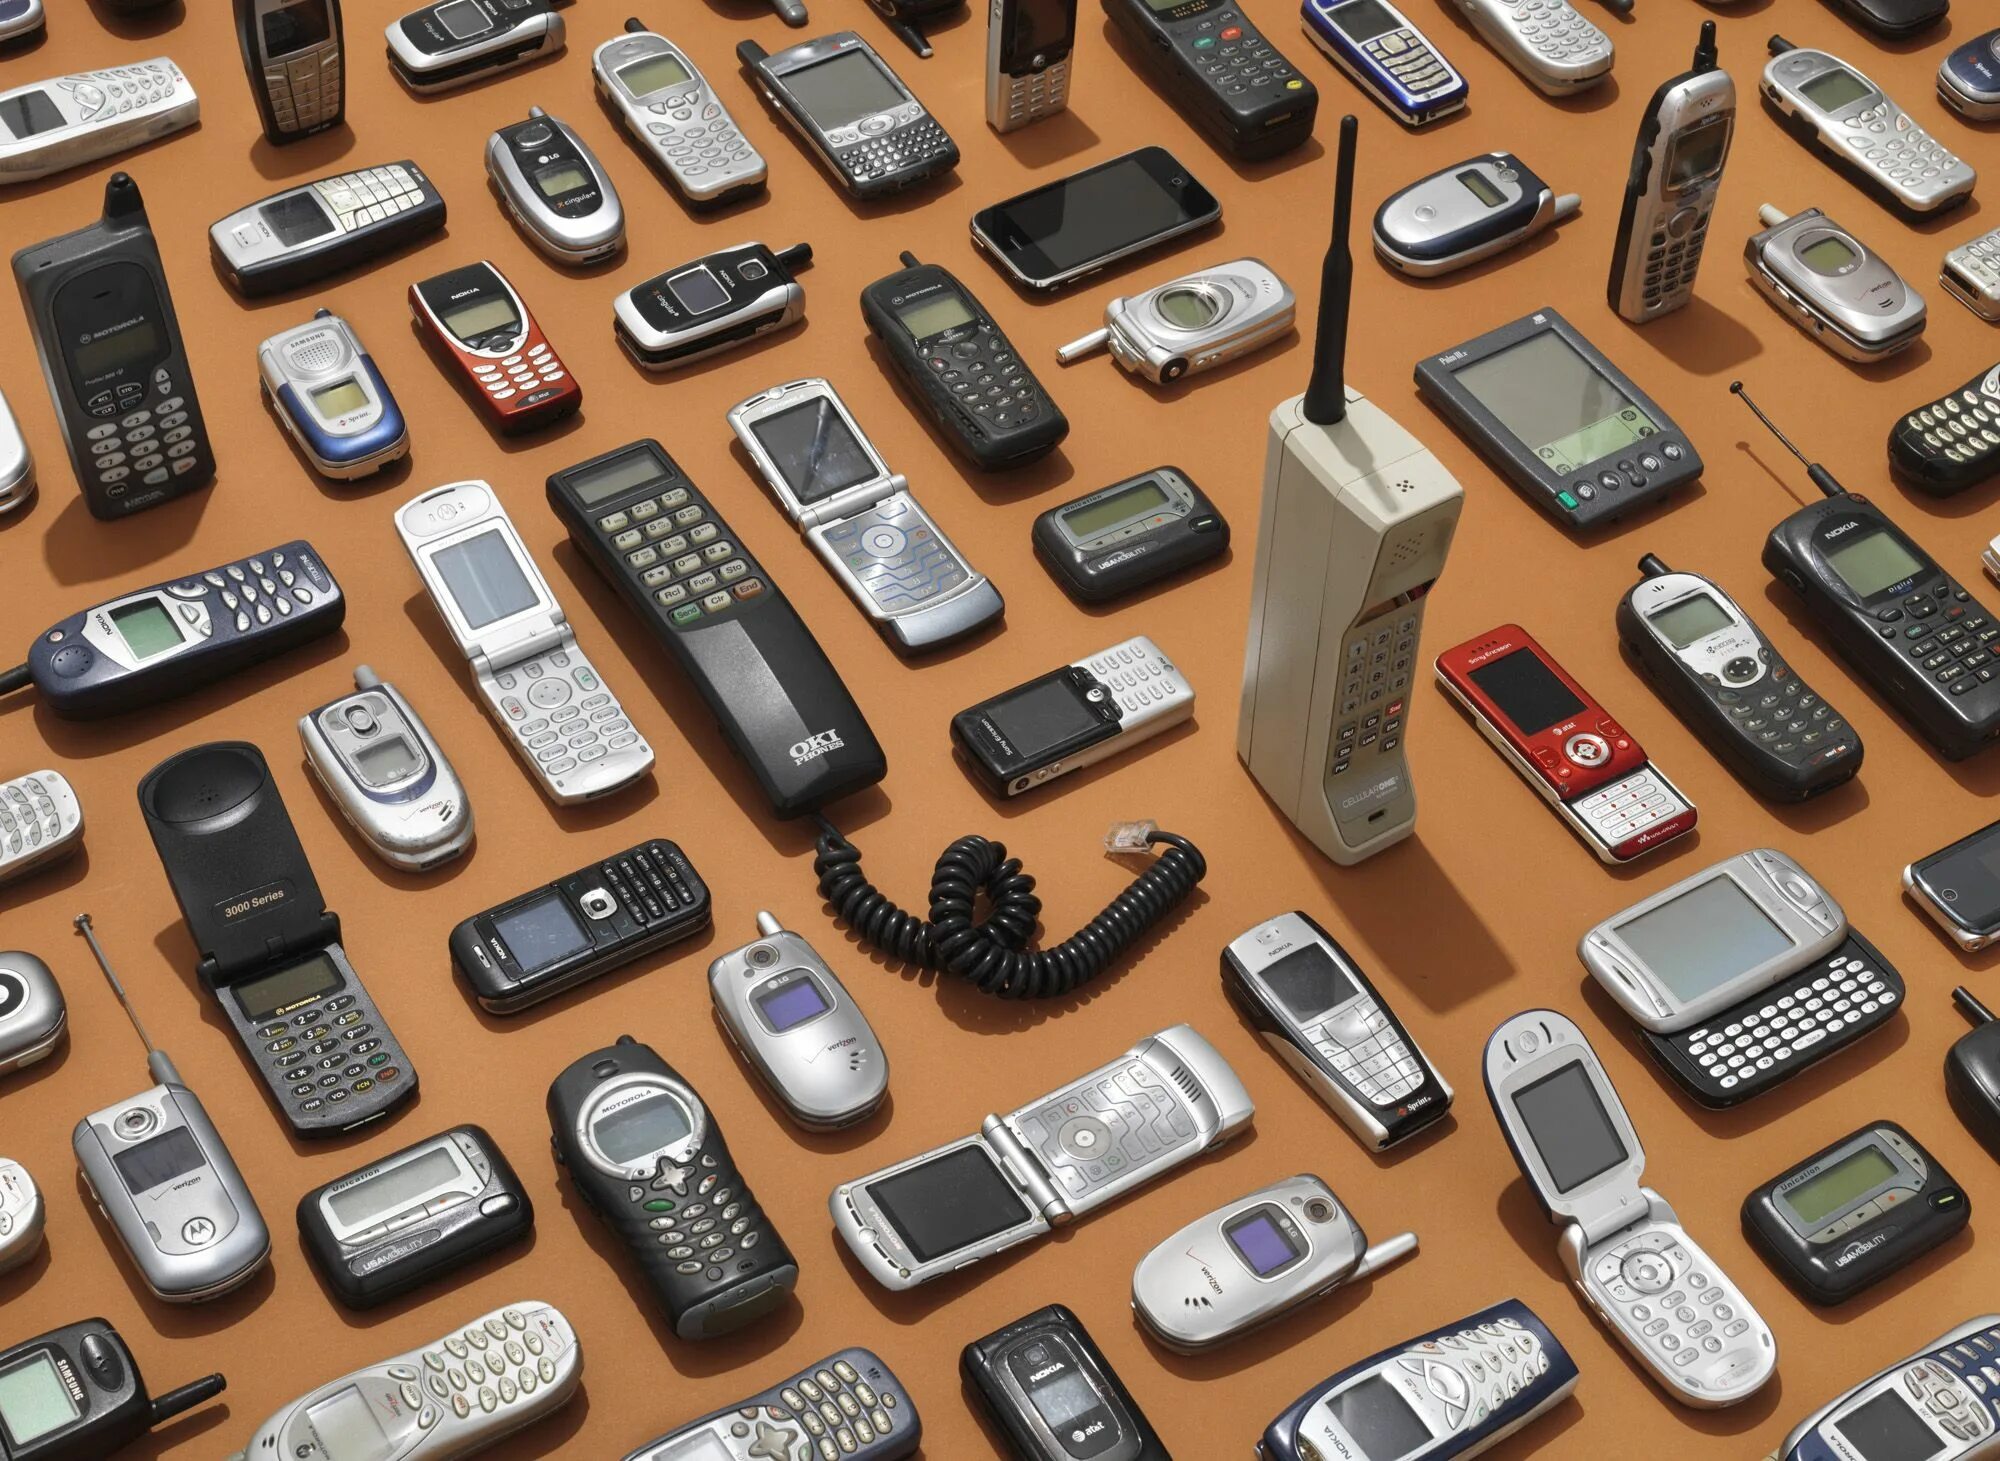 Включи много телефон. Сотовый телефон. Много телефонов. Сотовые телефоны много. Старые смартфоны.